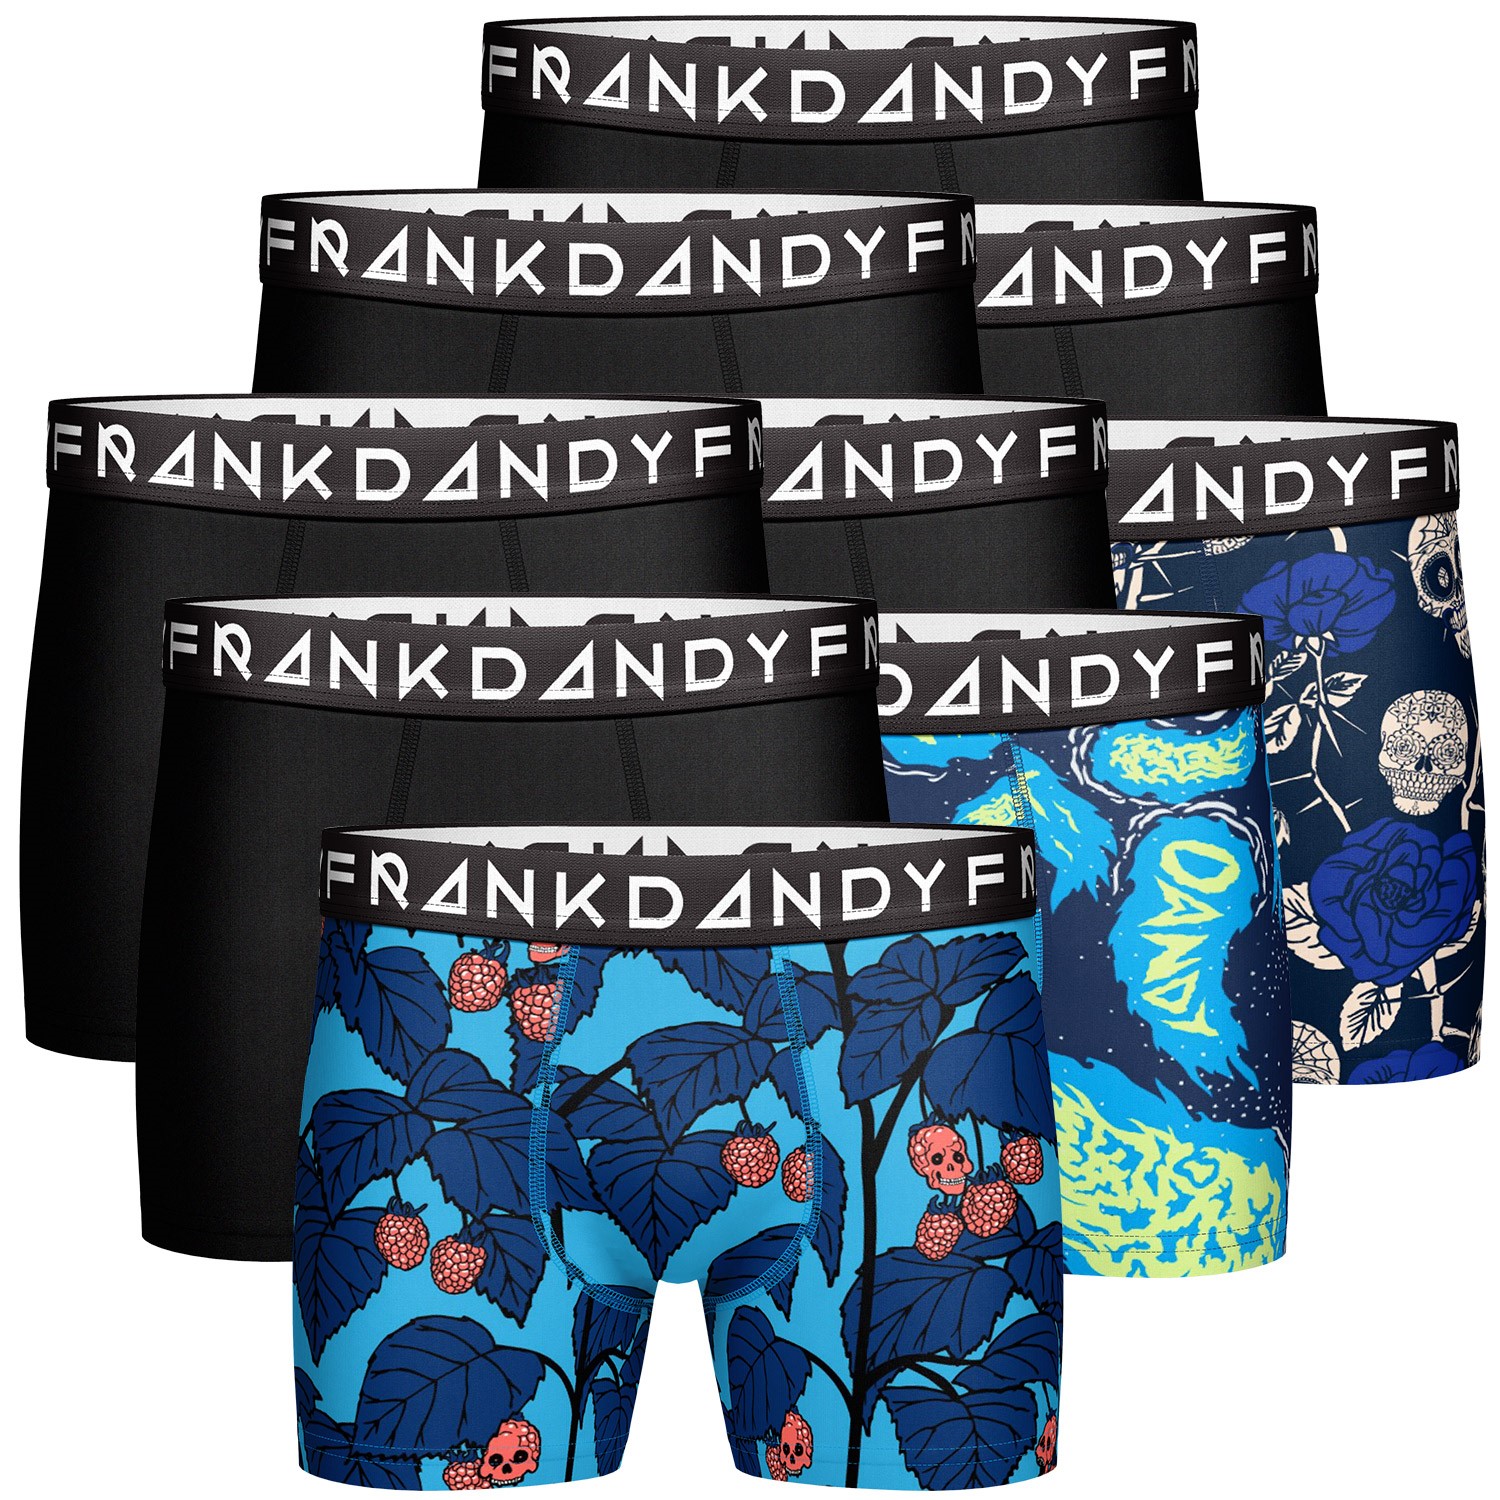 Frank Dandy Printed Boxers